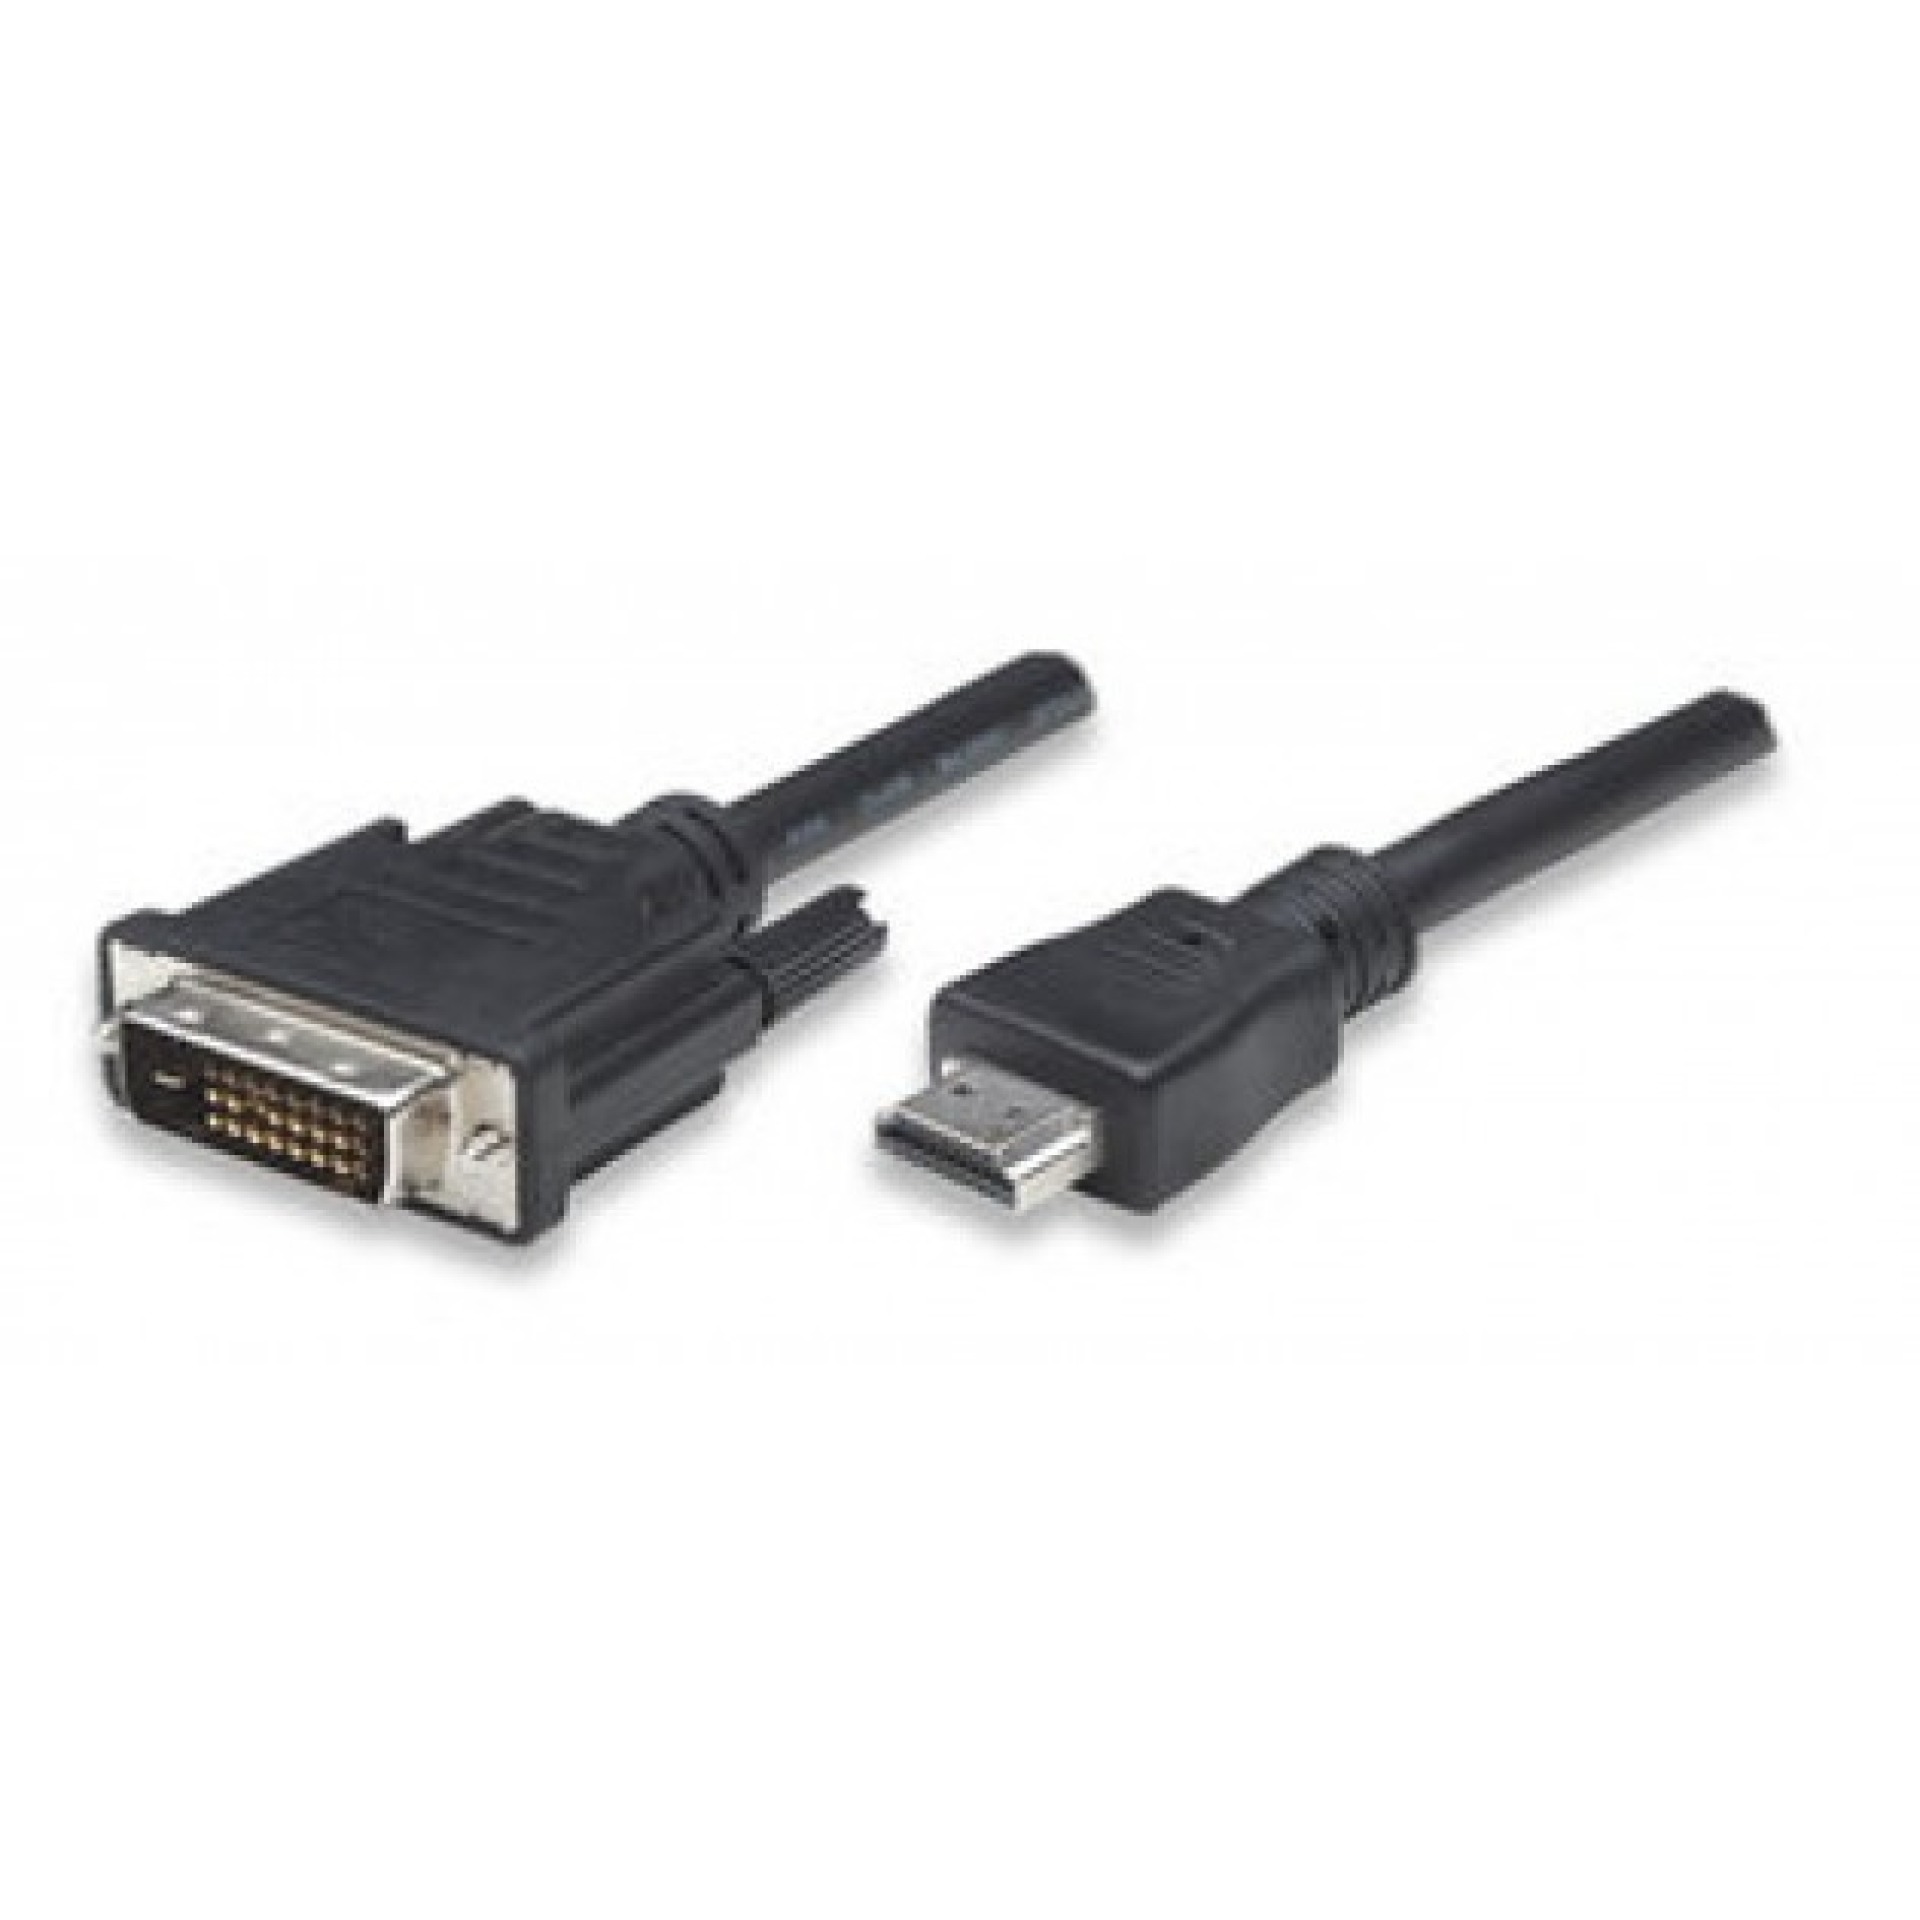 HDMI to DVI-D M/M Video Cable, black, 3 m